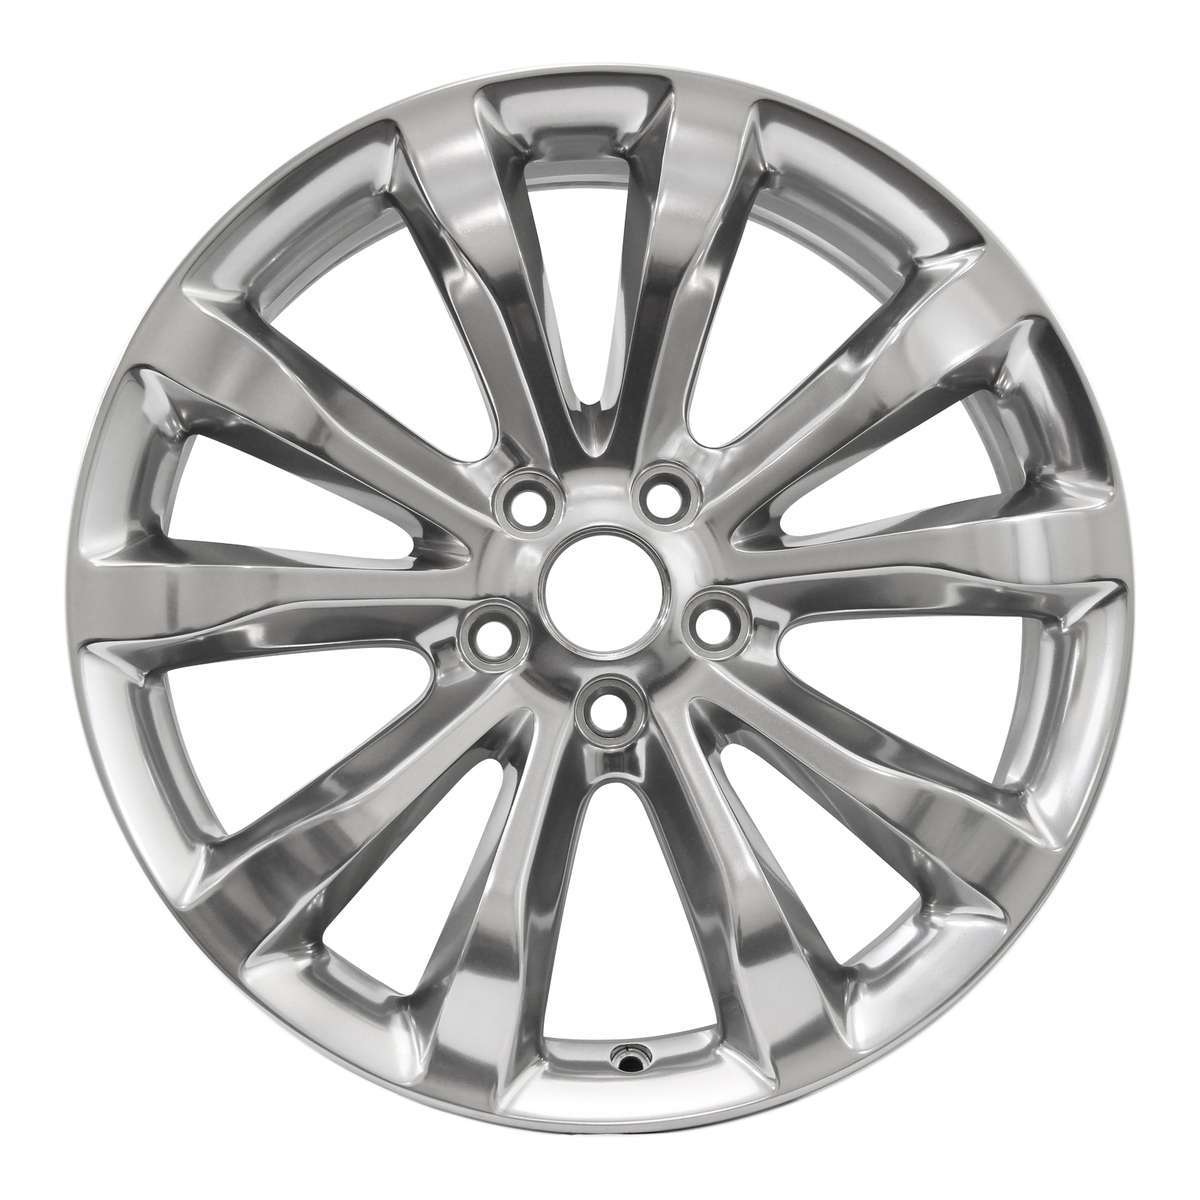 2020 Chrysler 300 19" OEM Wheel Rim W2538P